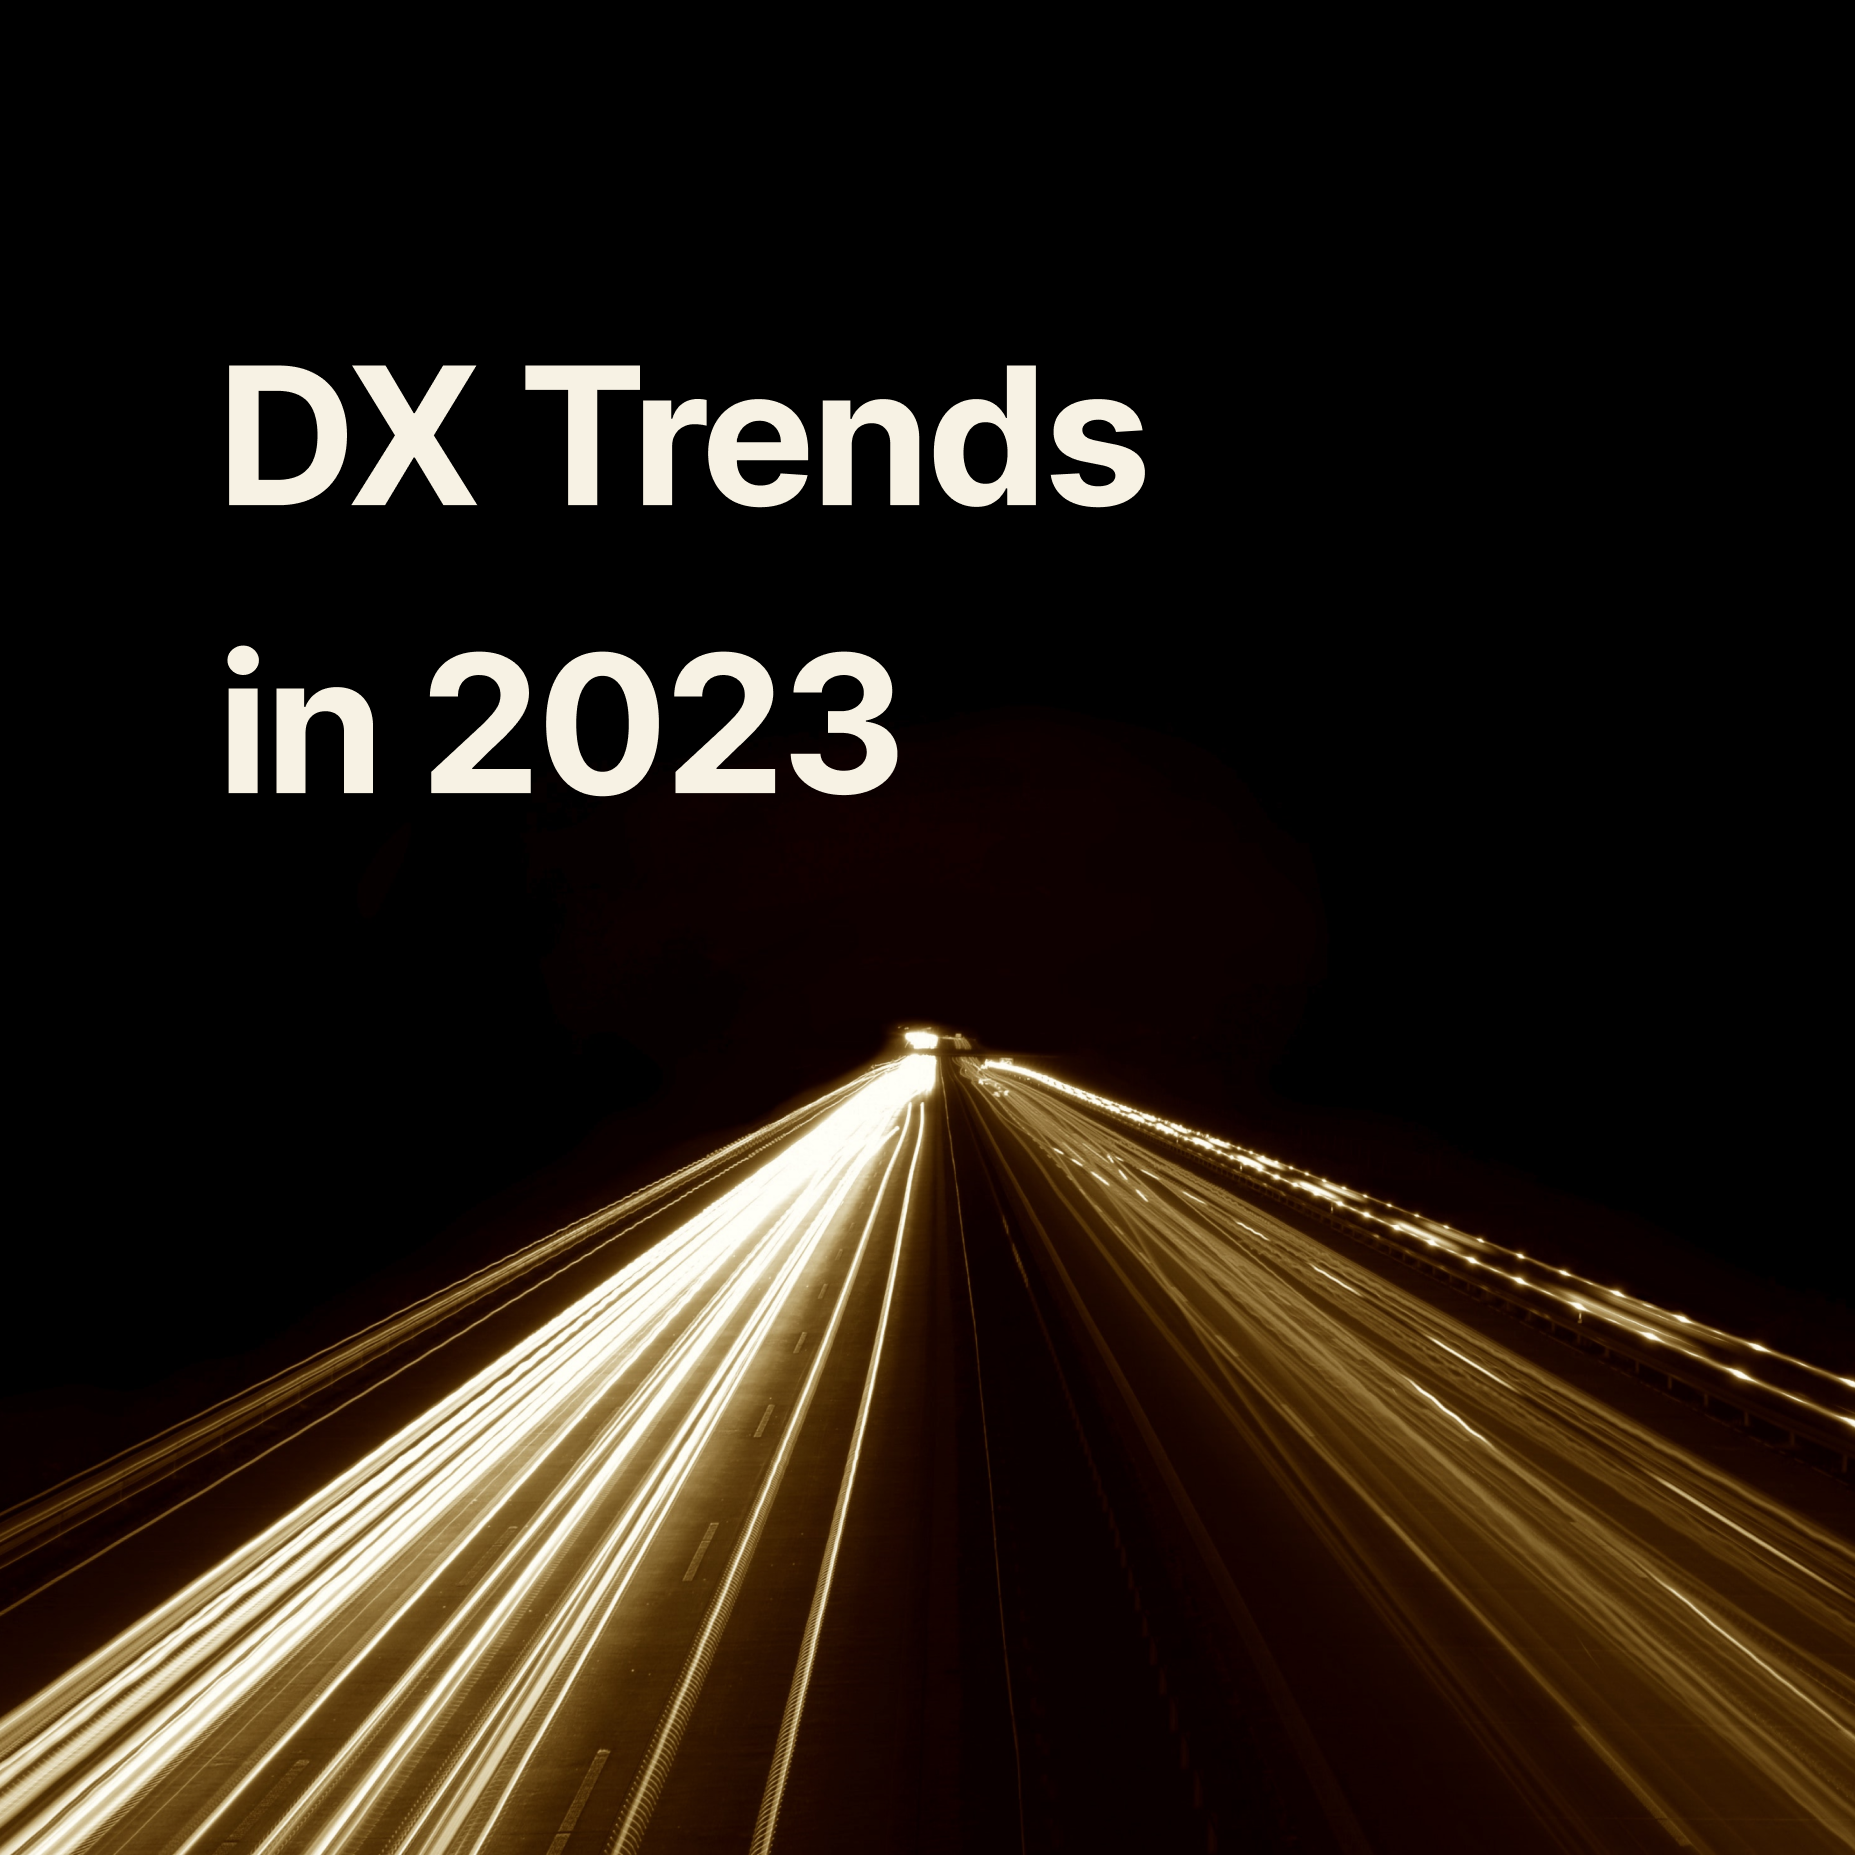 Digital transformation & technology trends in 2023